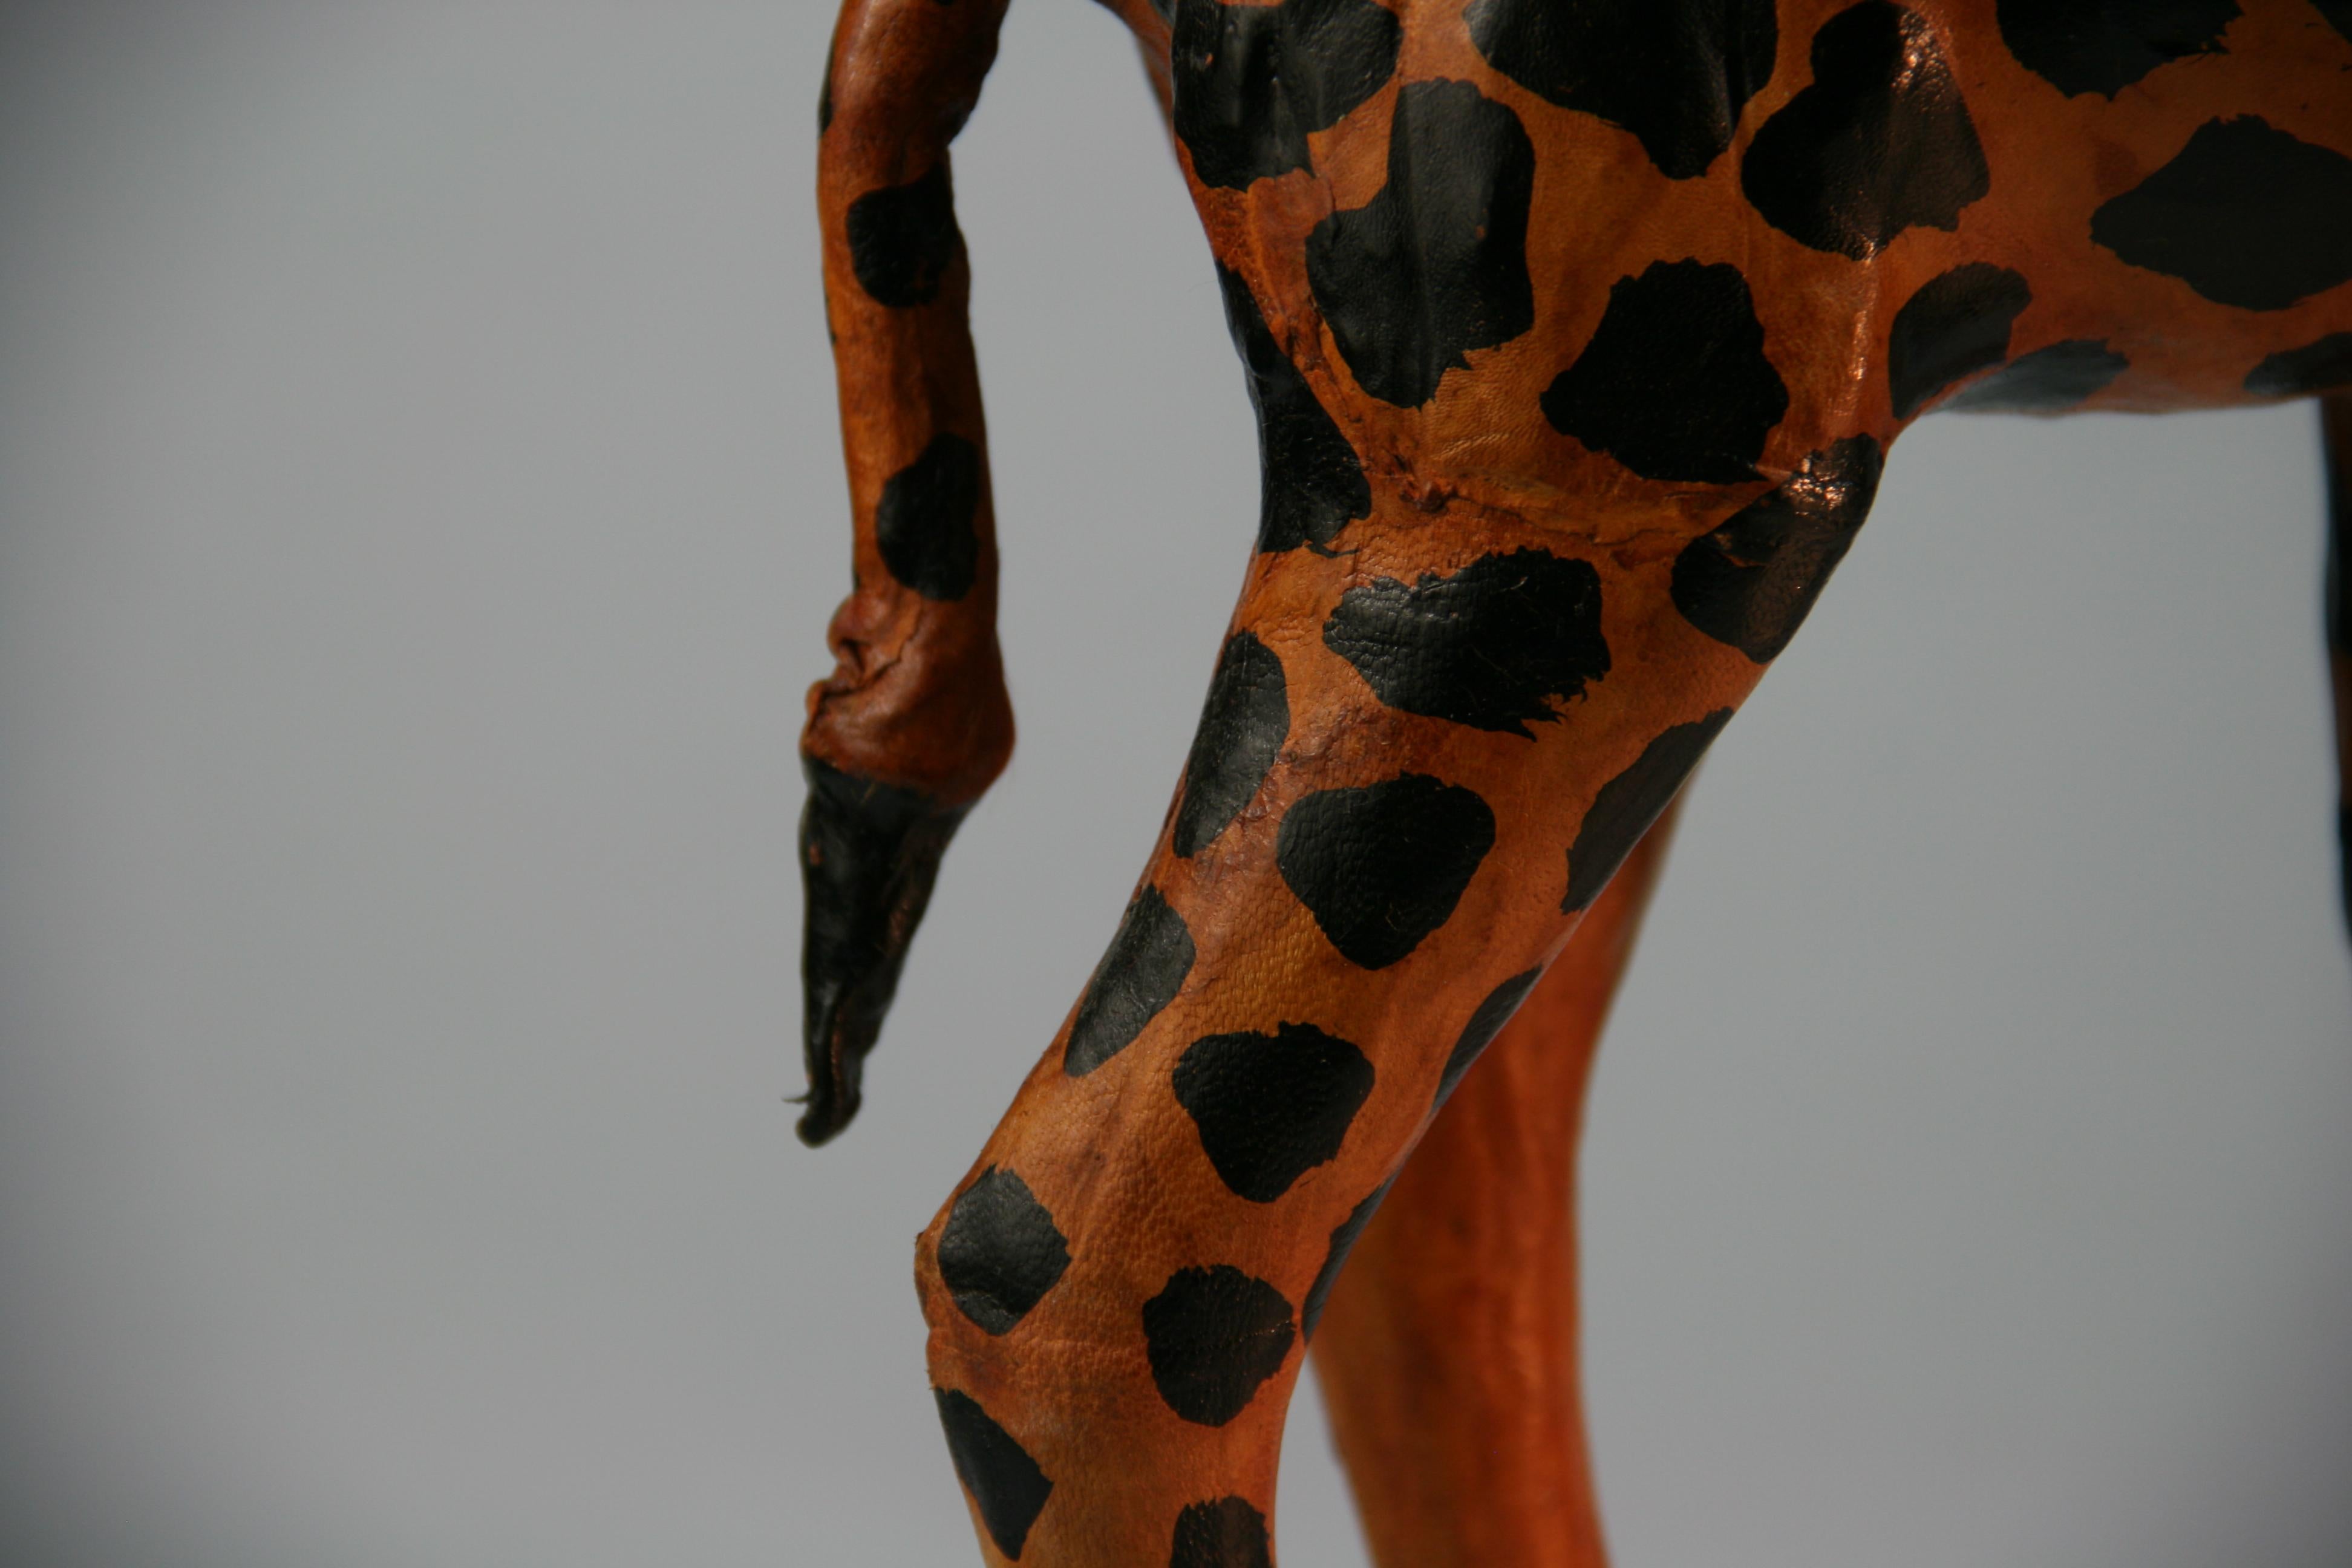 dessin girafe avec la main